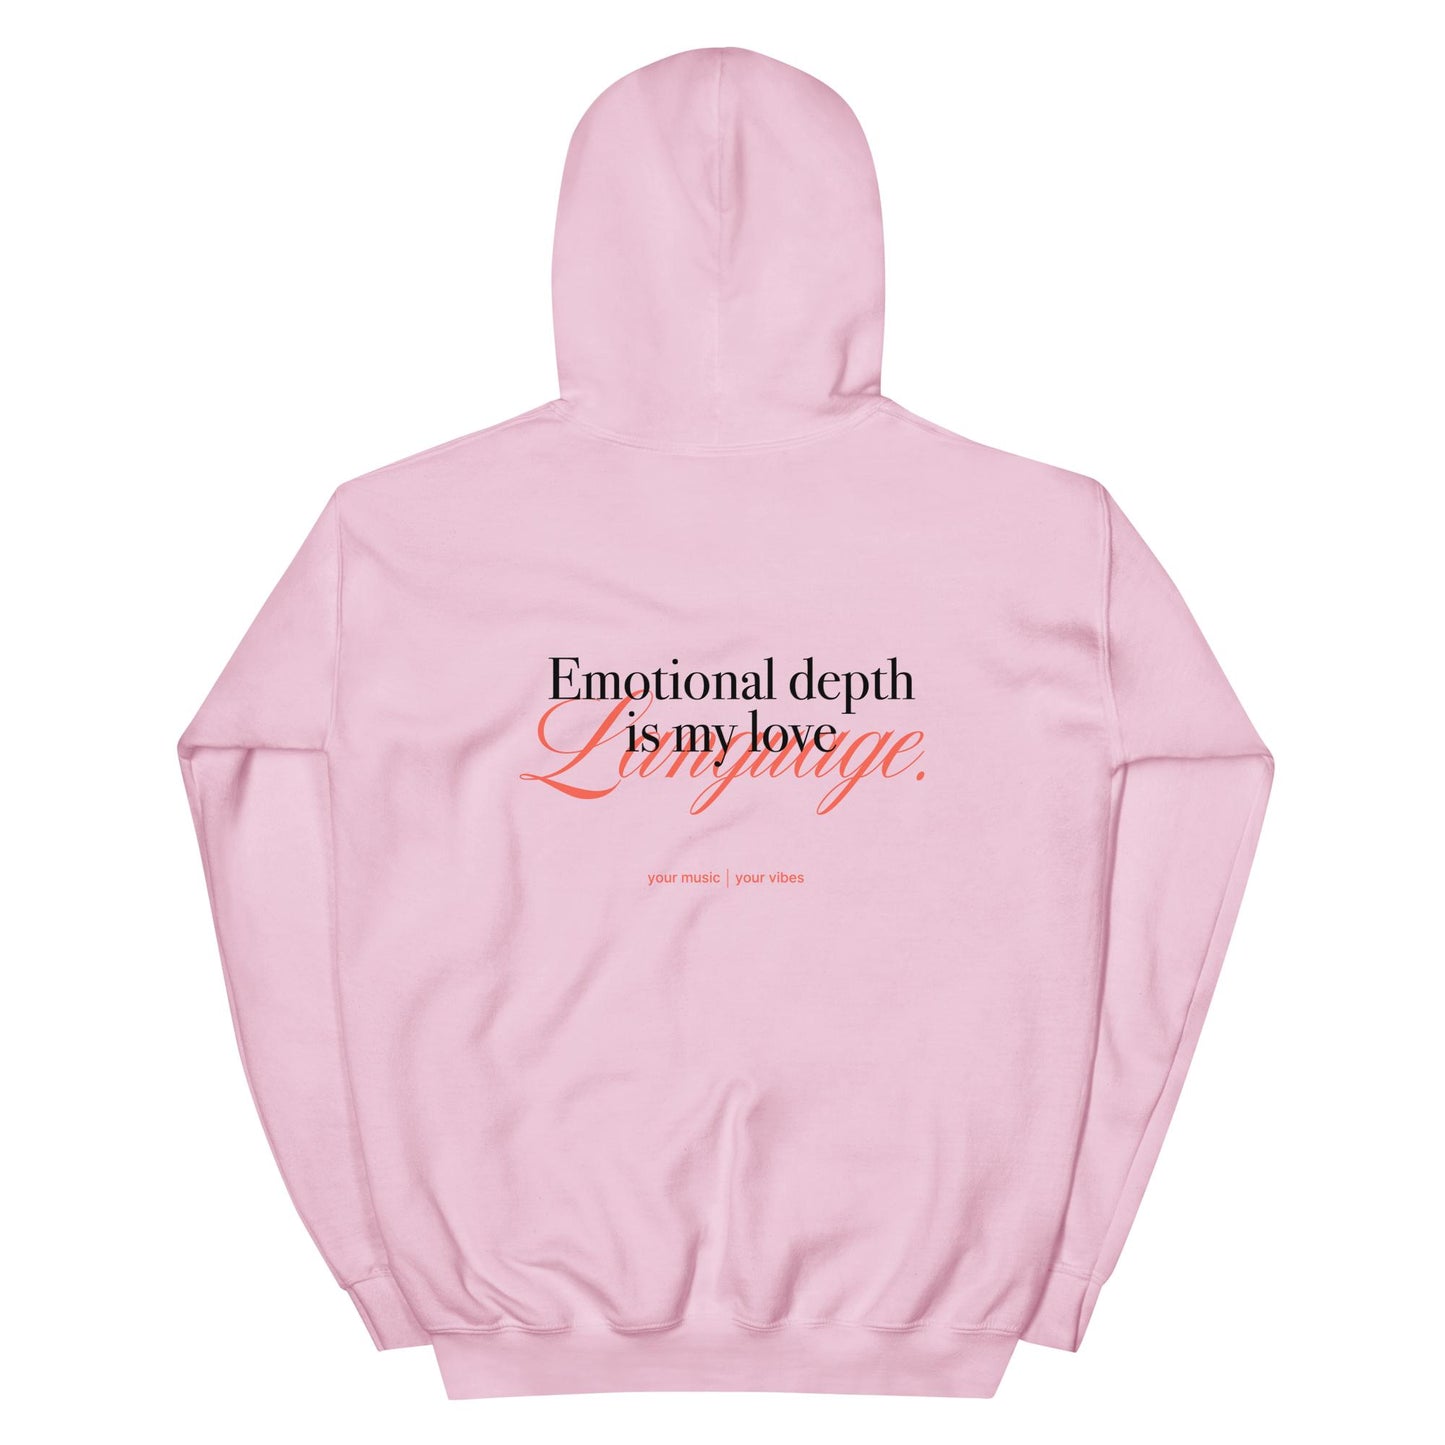 "emotional depth is my love language" | limited edition unisex hoodie